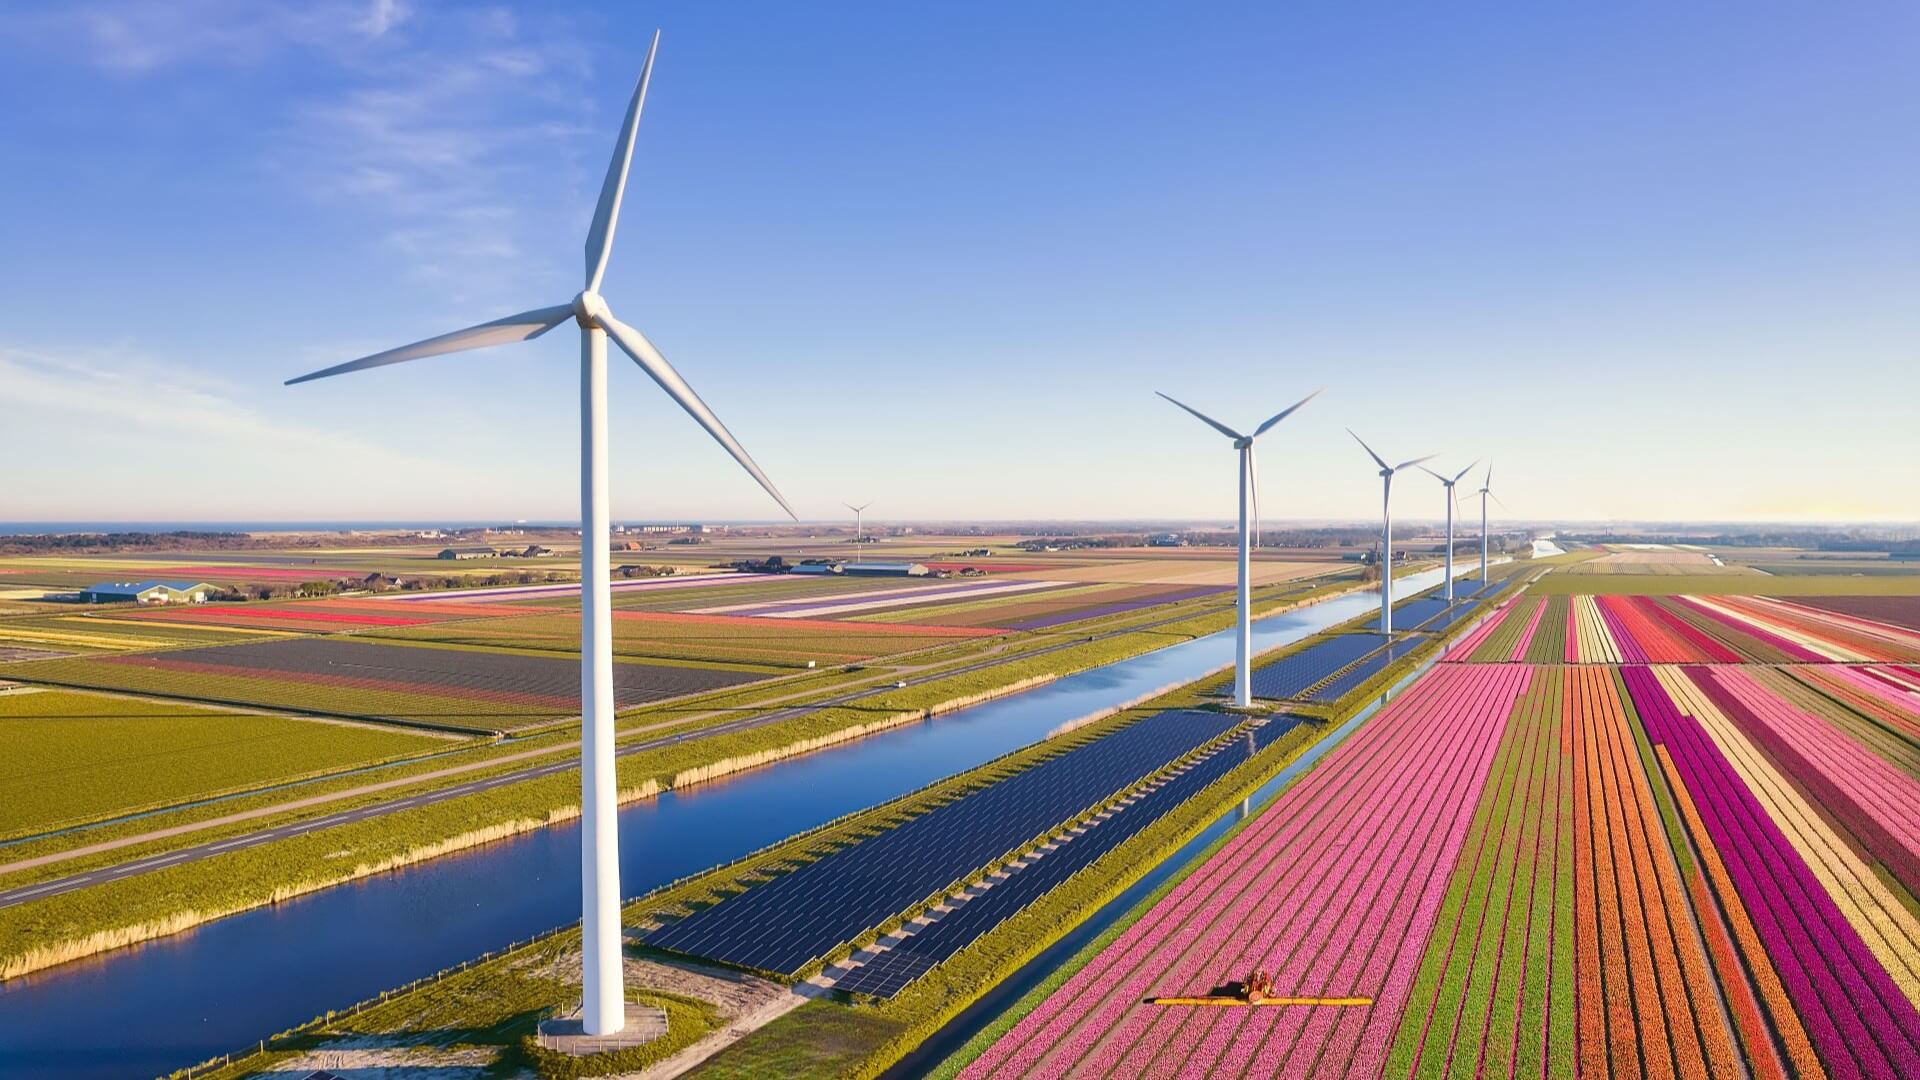 Wind turbines and solar panels alongside tulip fields in the Netherlands